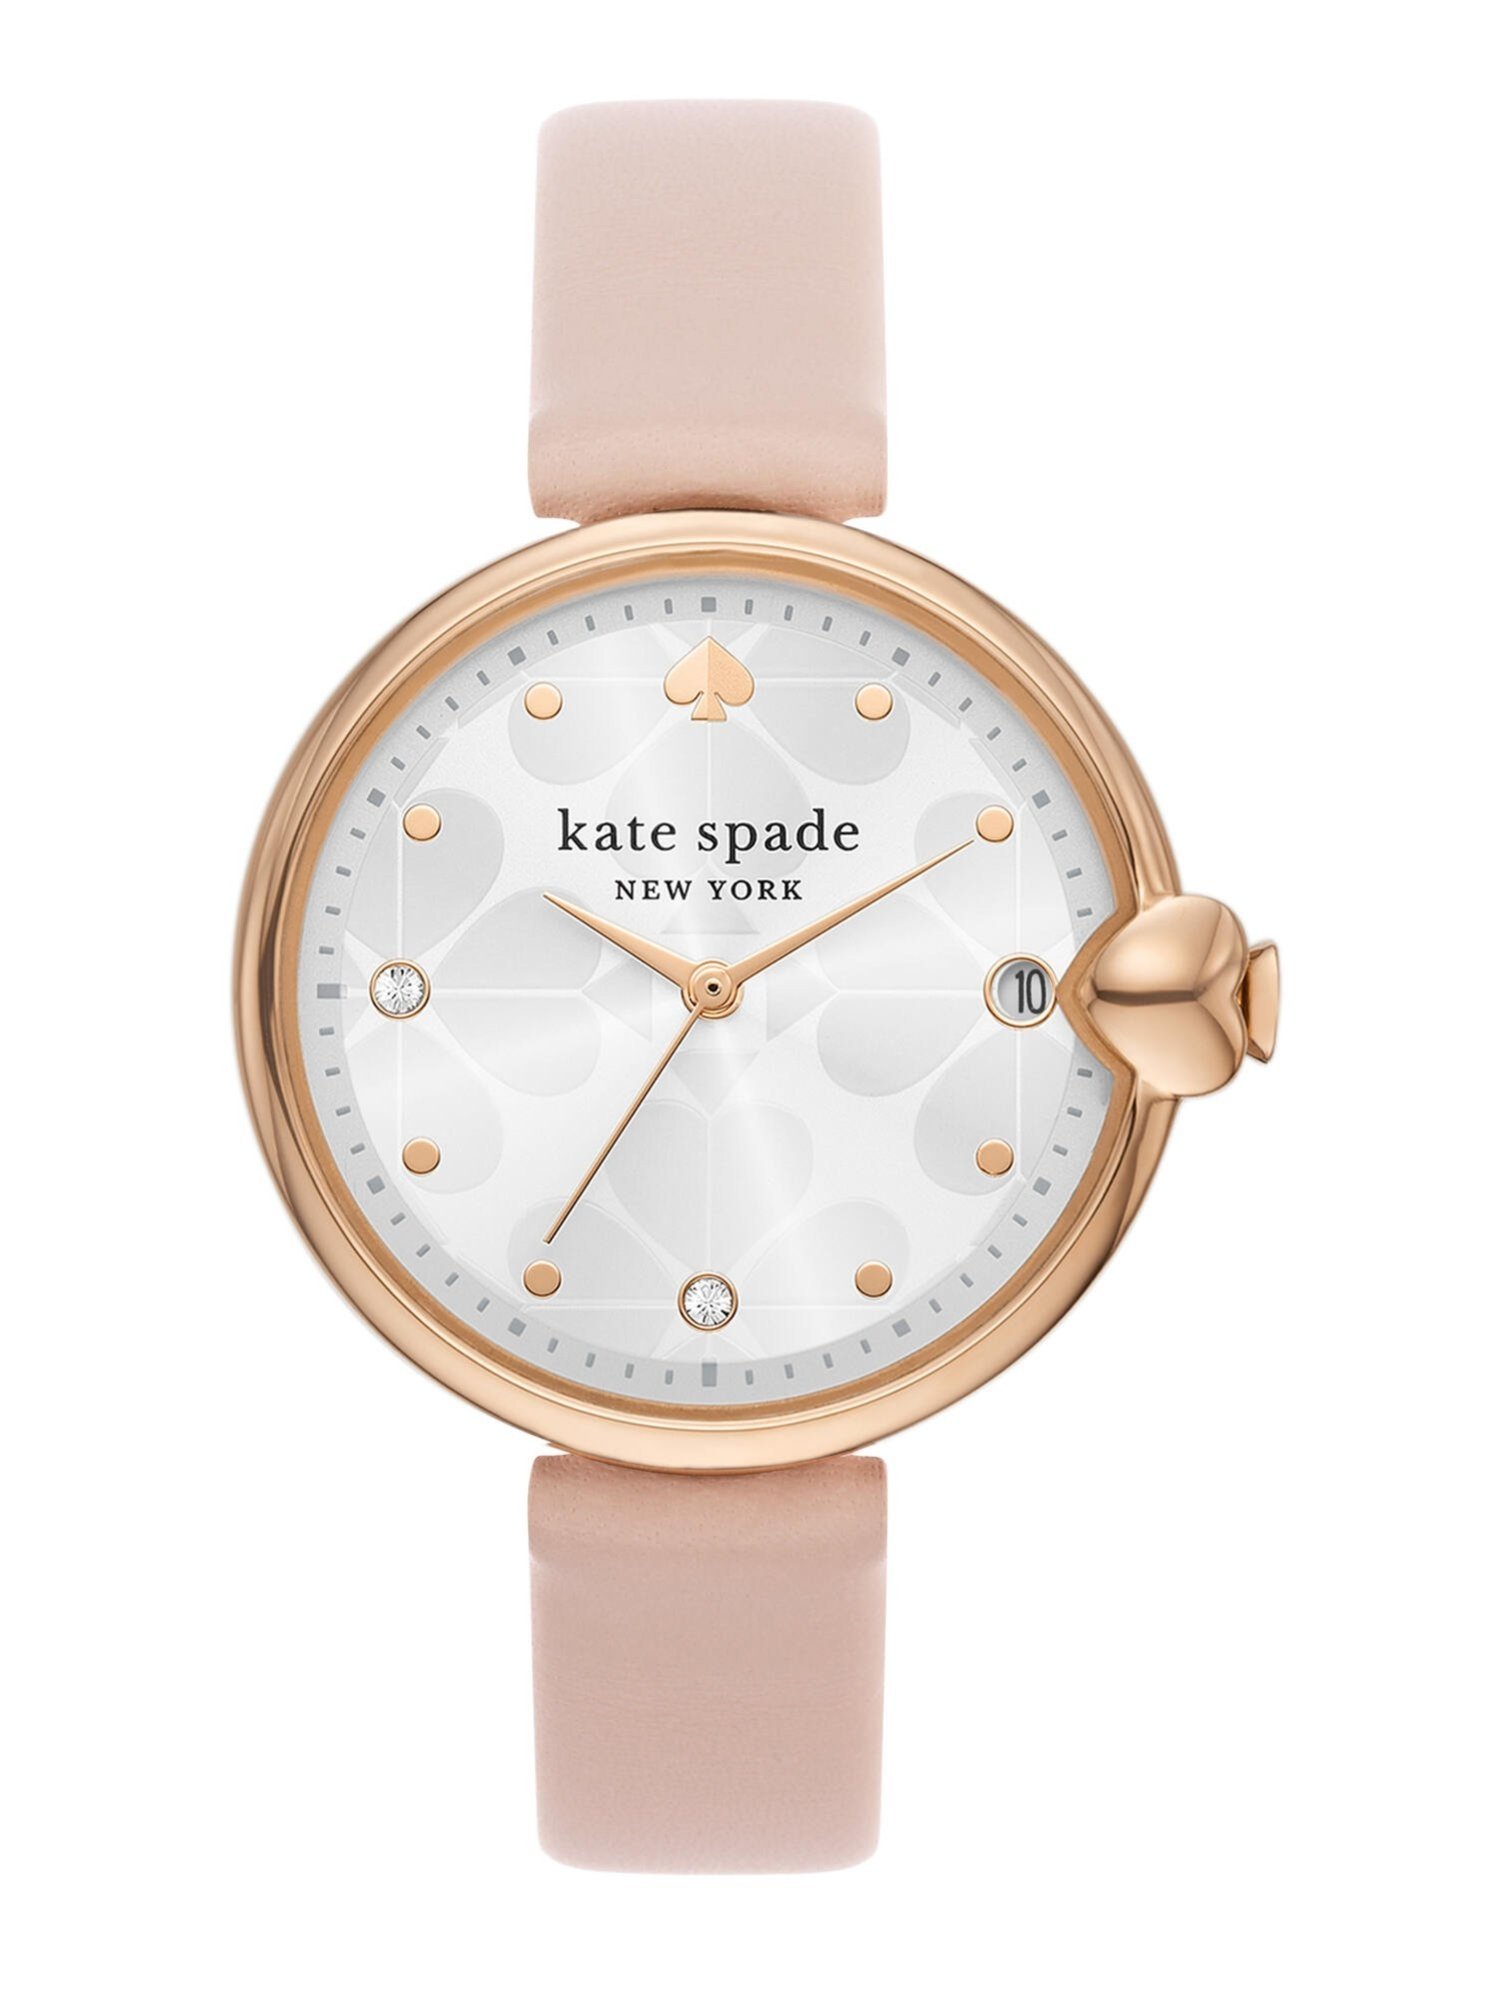 kate spade new york Chelsea Park KSW1785 ウォッチステーションインターナショナル アクセサリー・腕時計 腕時計 ピンク【送料無料】